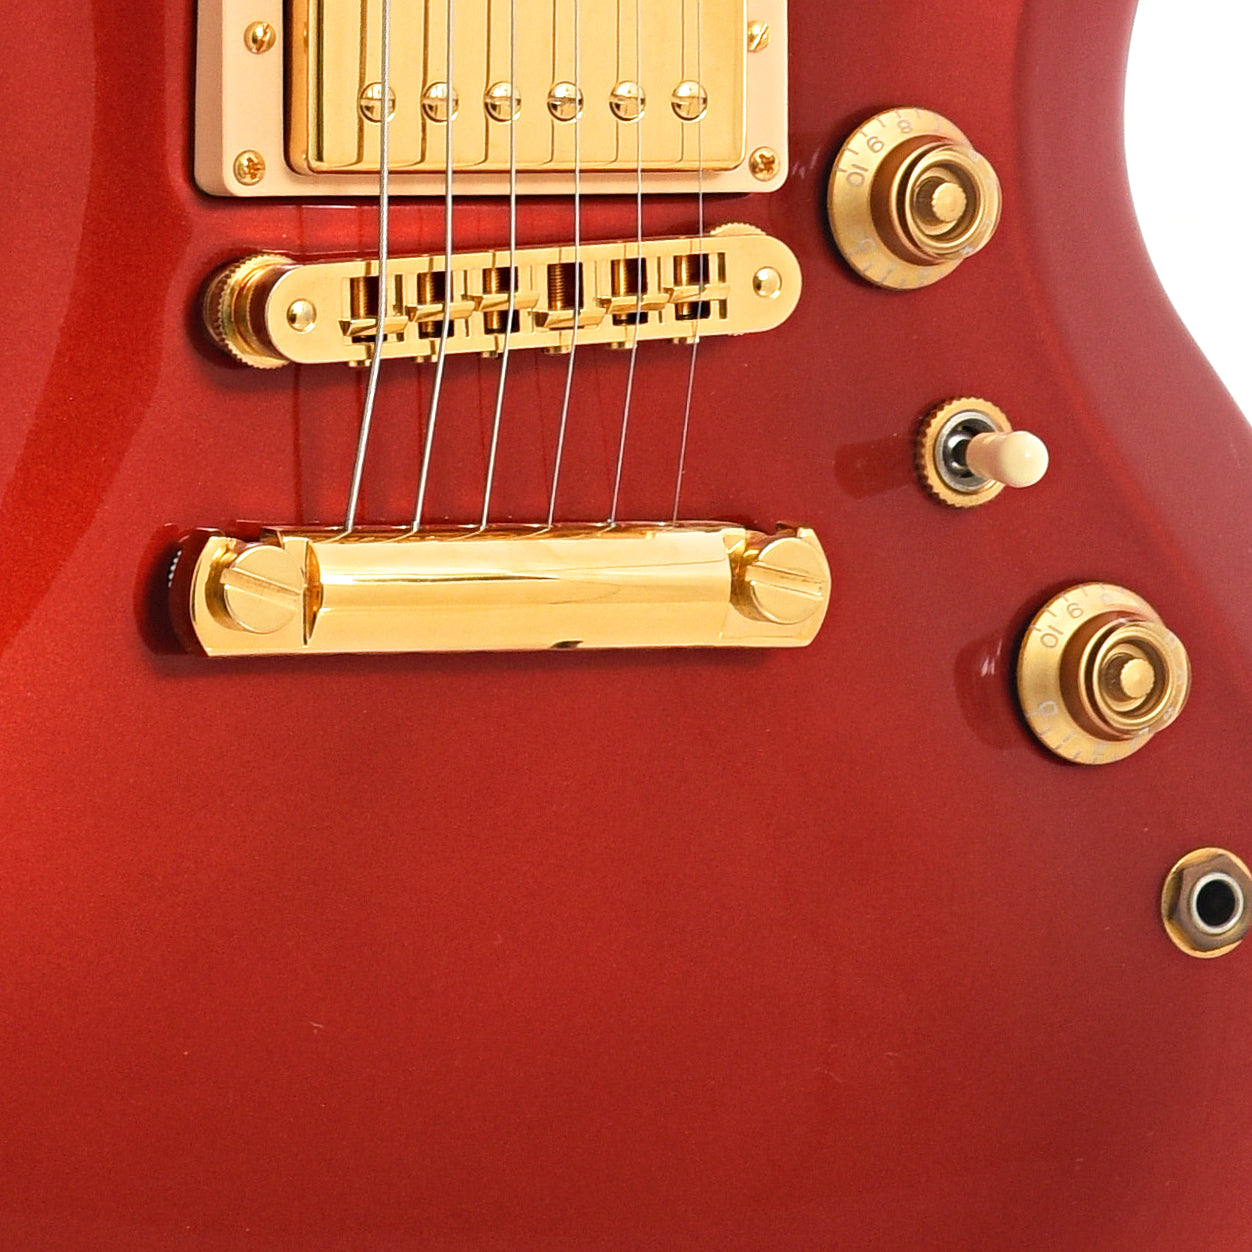 1962 Gibson SG Junior Guitar - El Diablo Amps Online Store